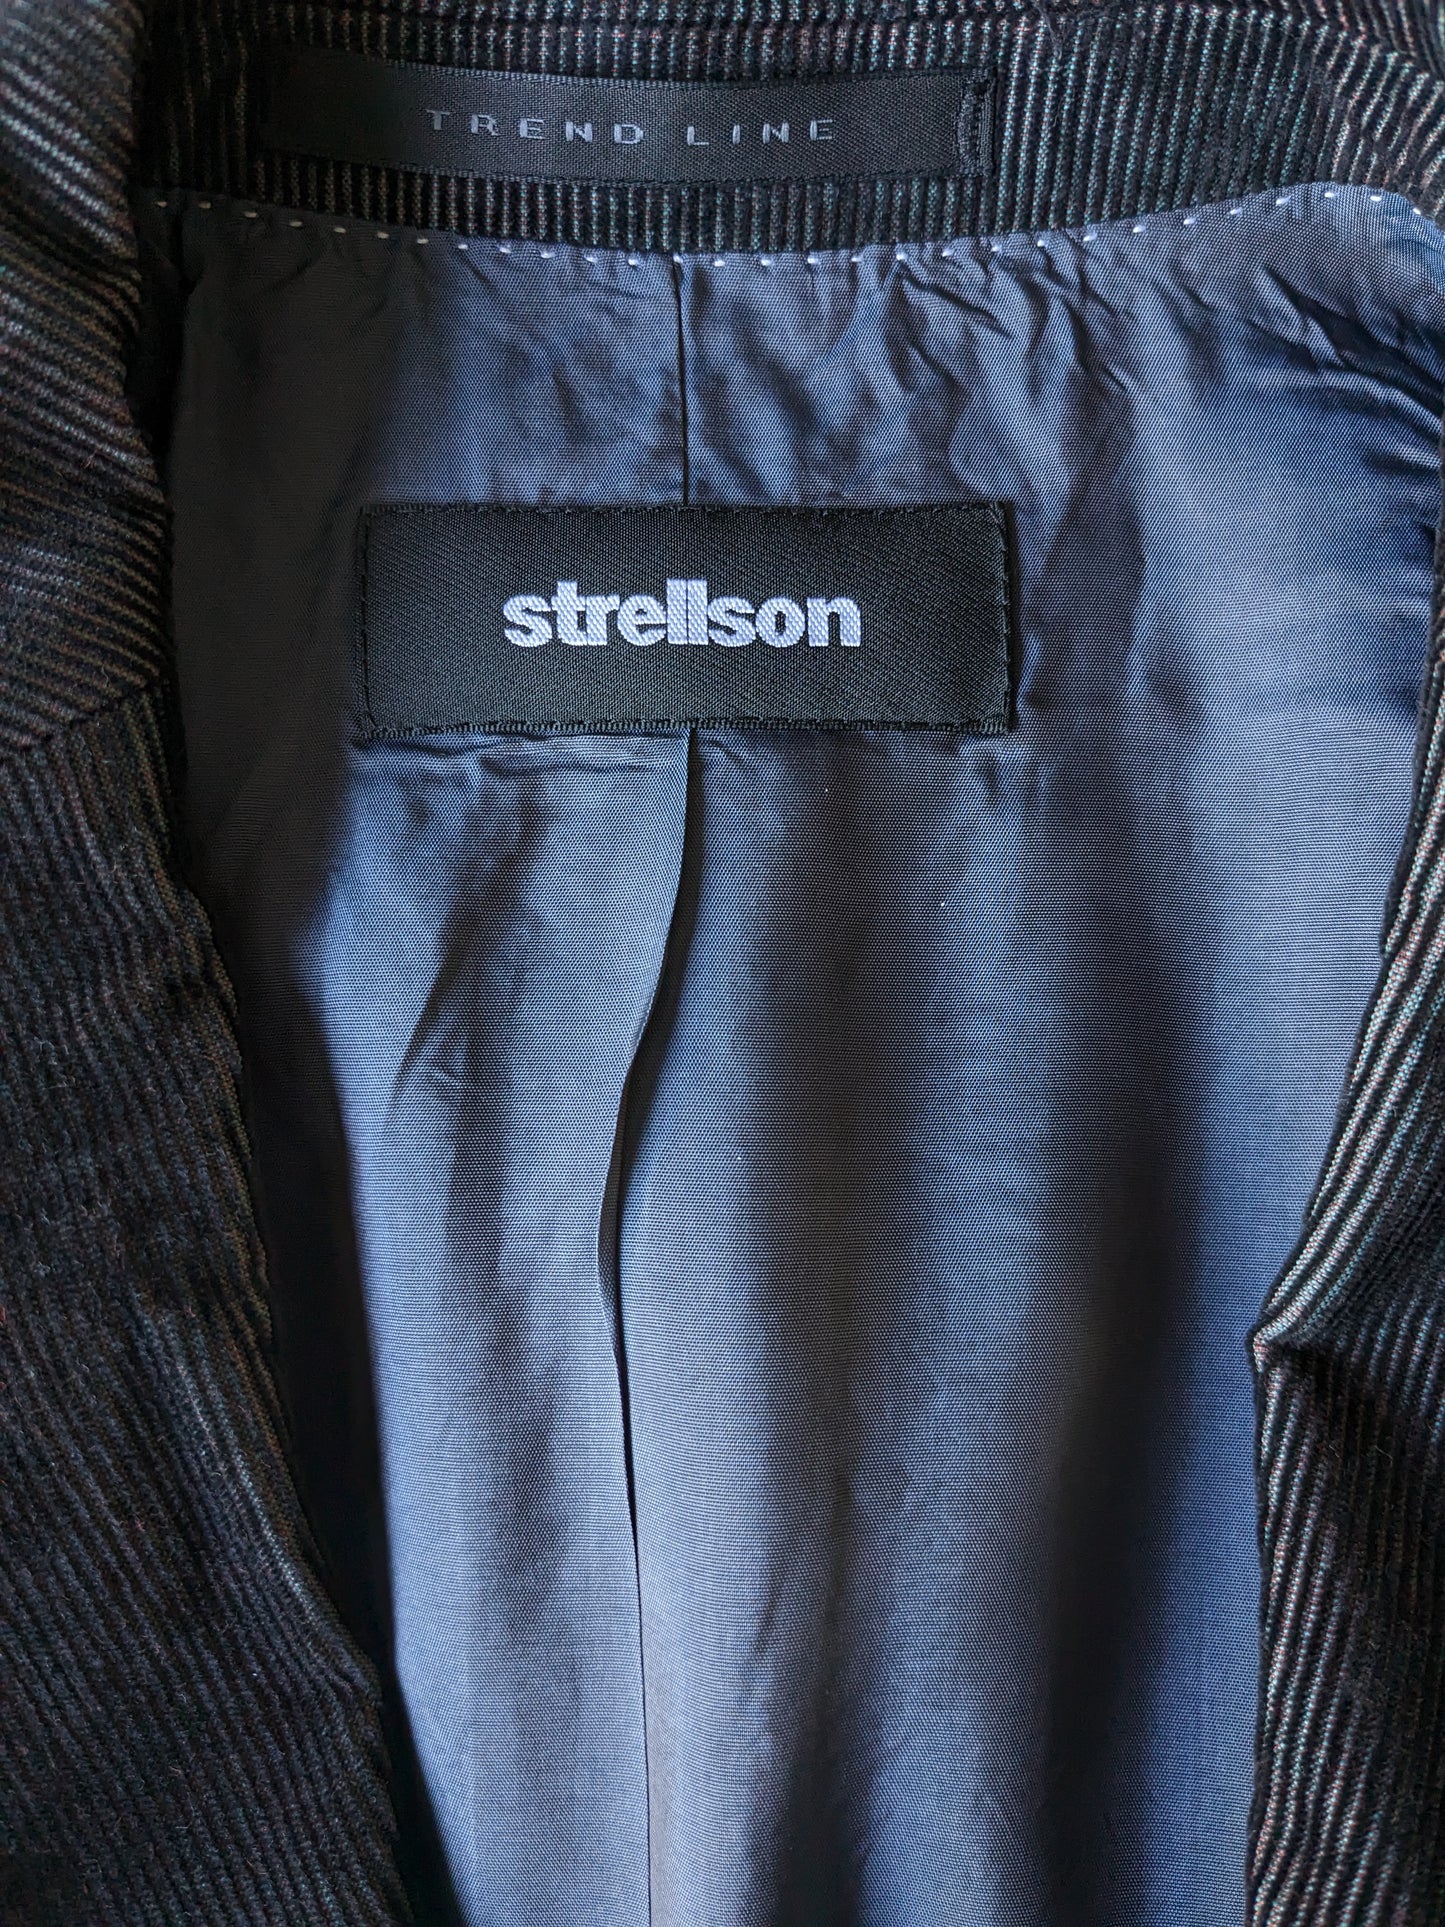 Strellson Trend Line RIB Costume. Negro con brillo metálico verde/morado. Tamaño 46 / s